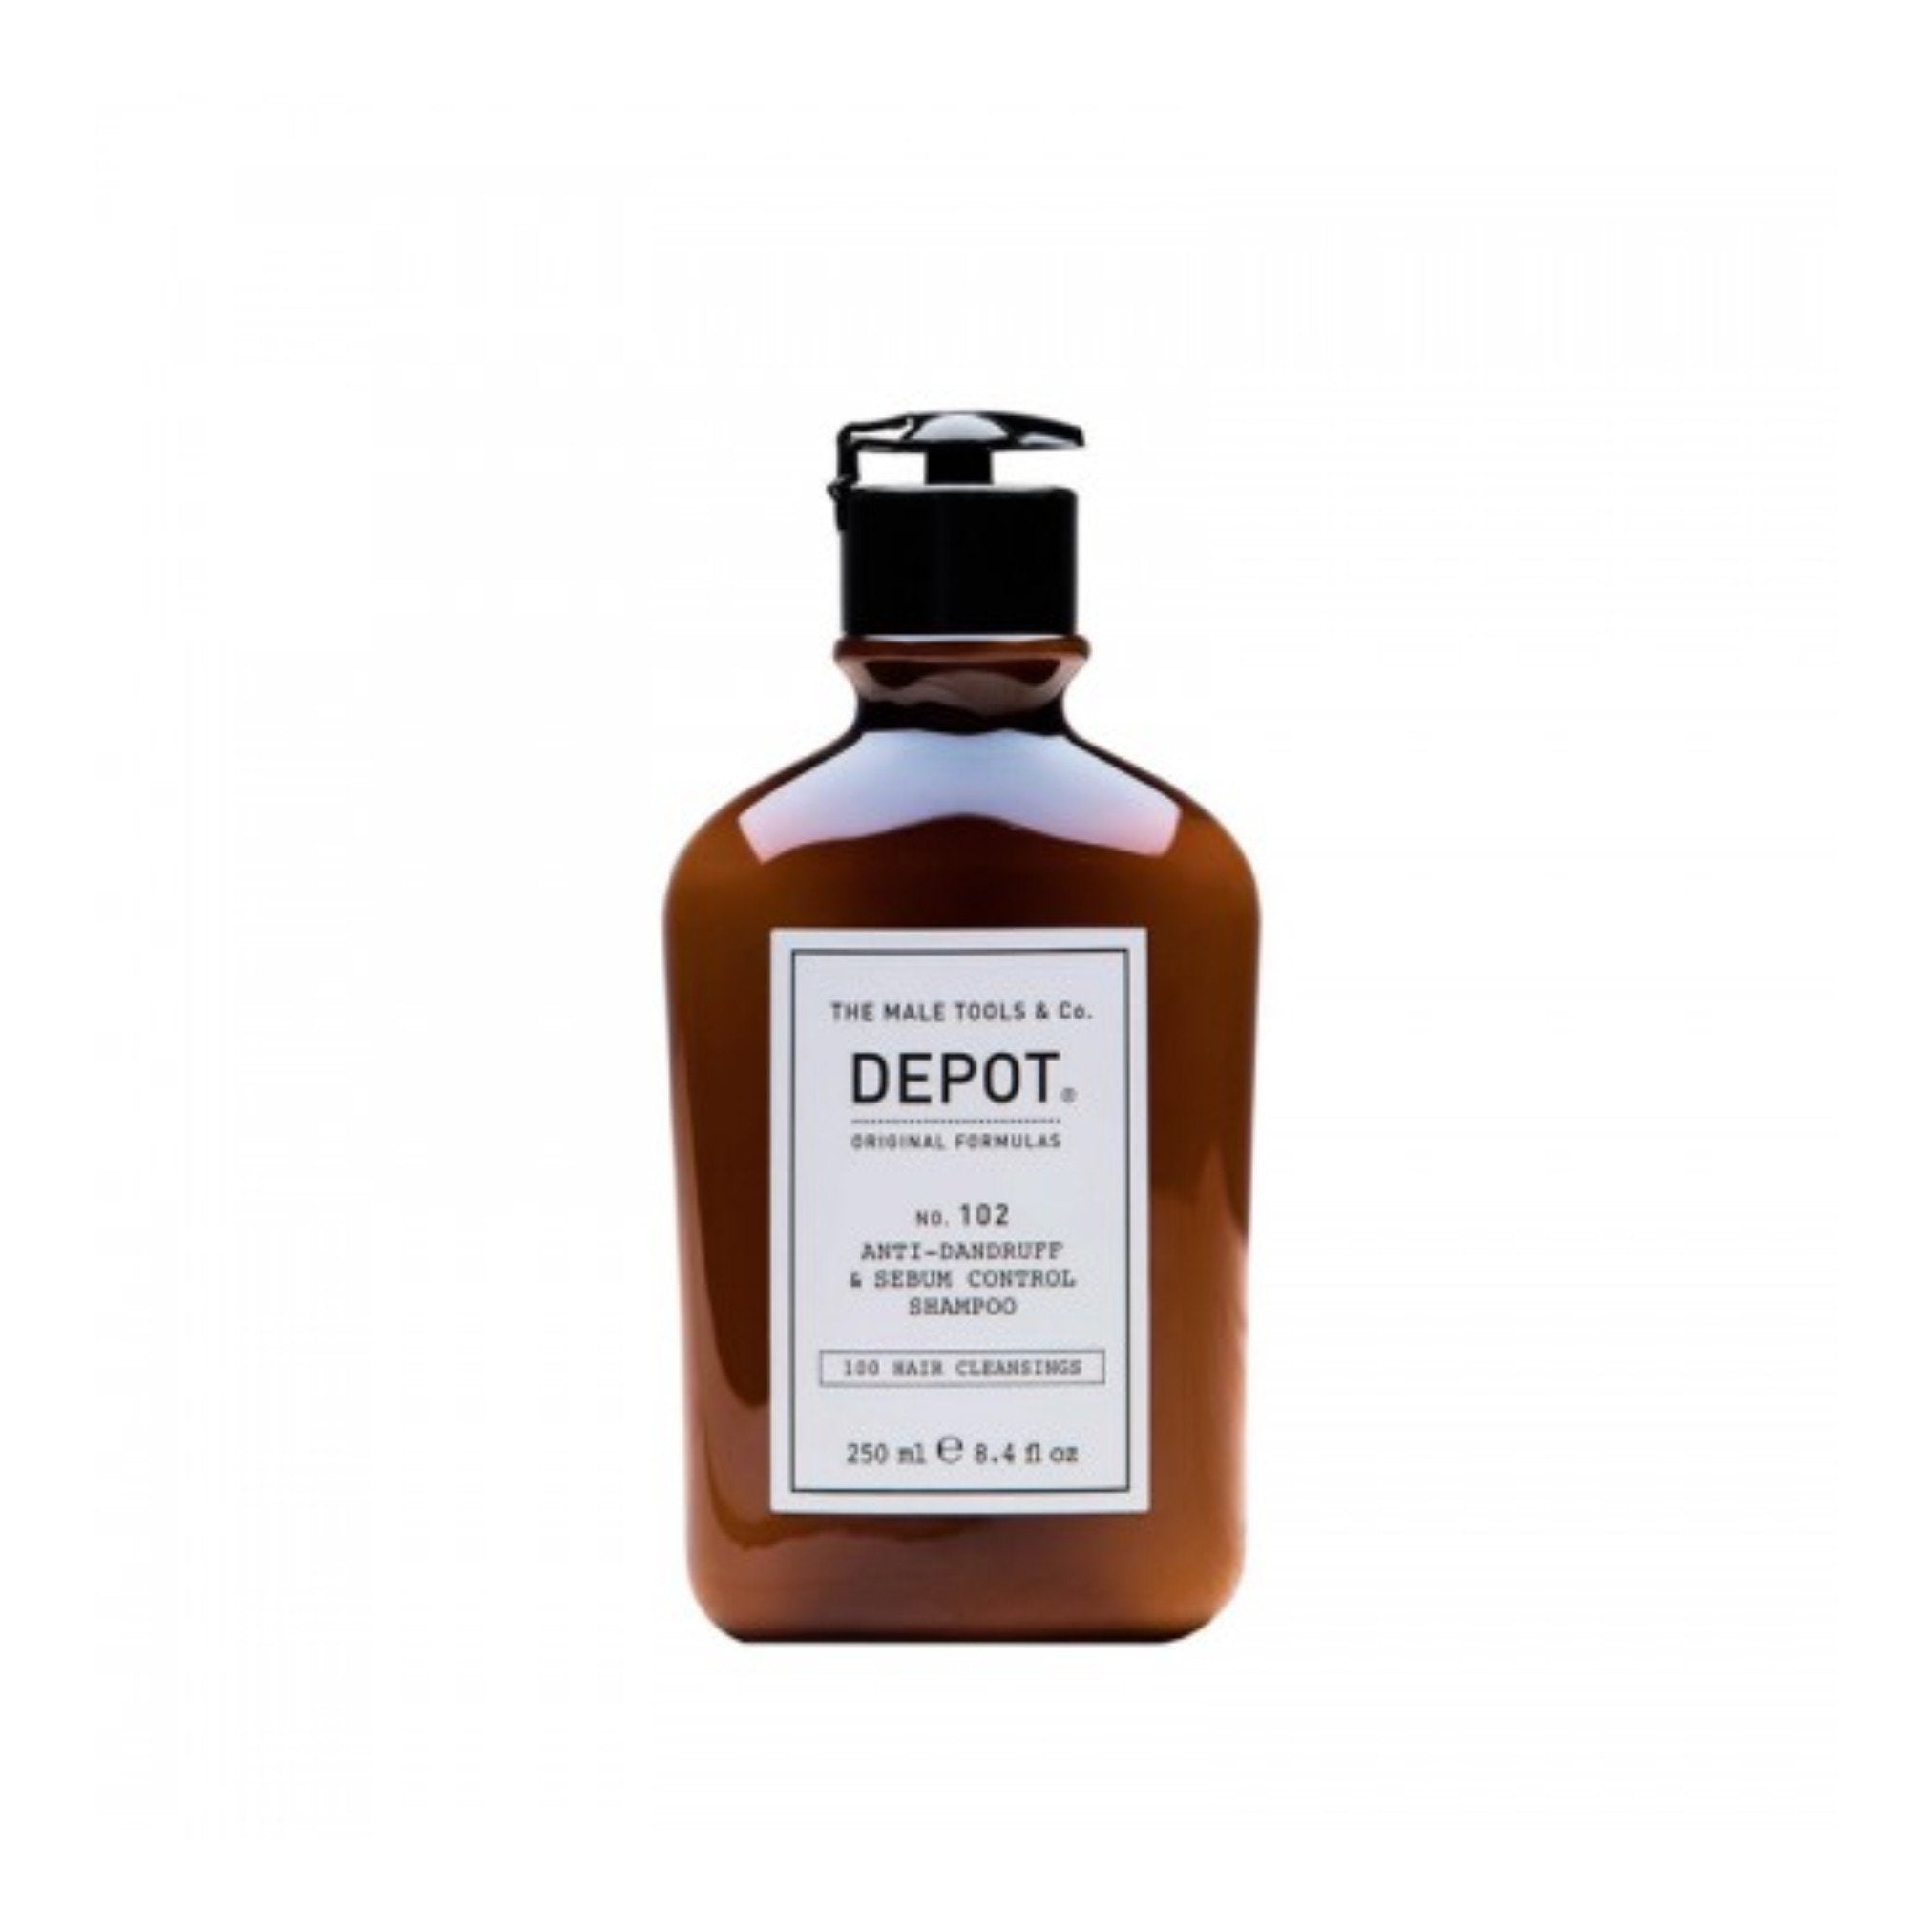 Depot No 102 Anti-Dandruff & Sebum Control Shampoo 250ml